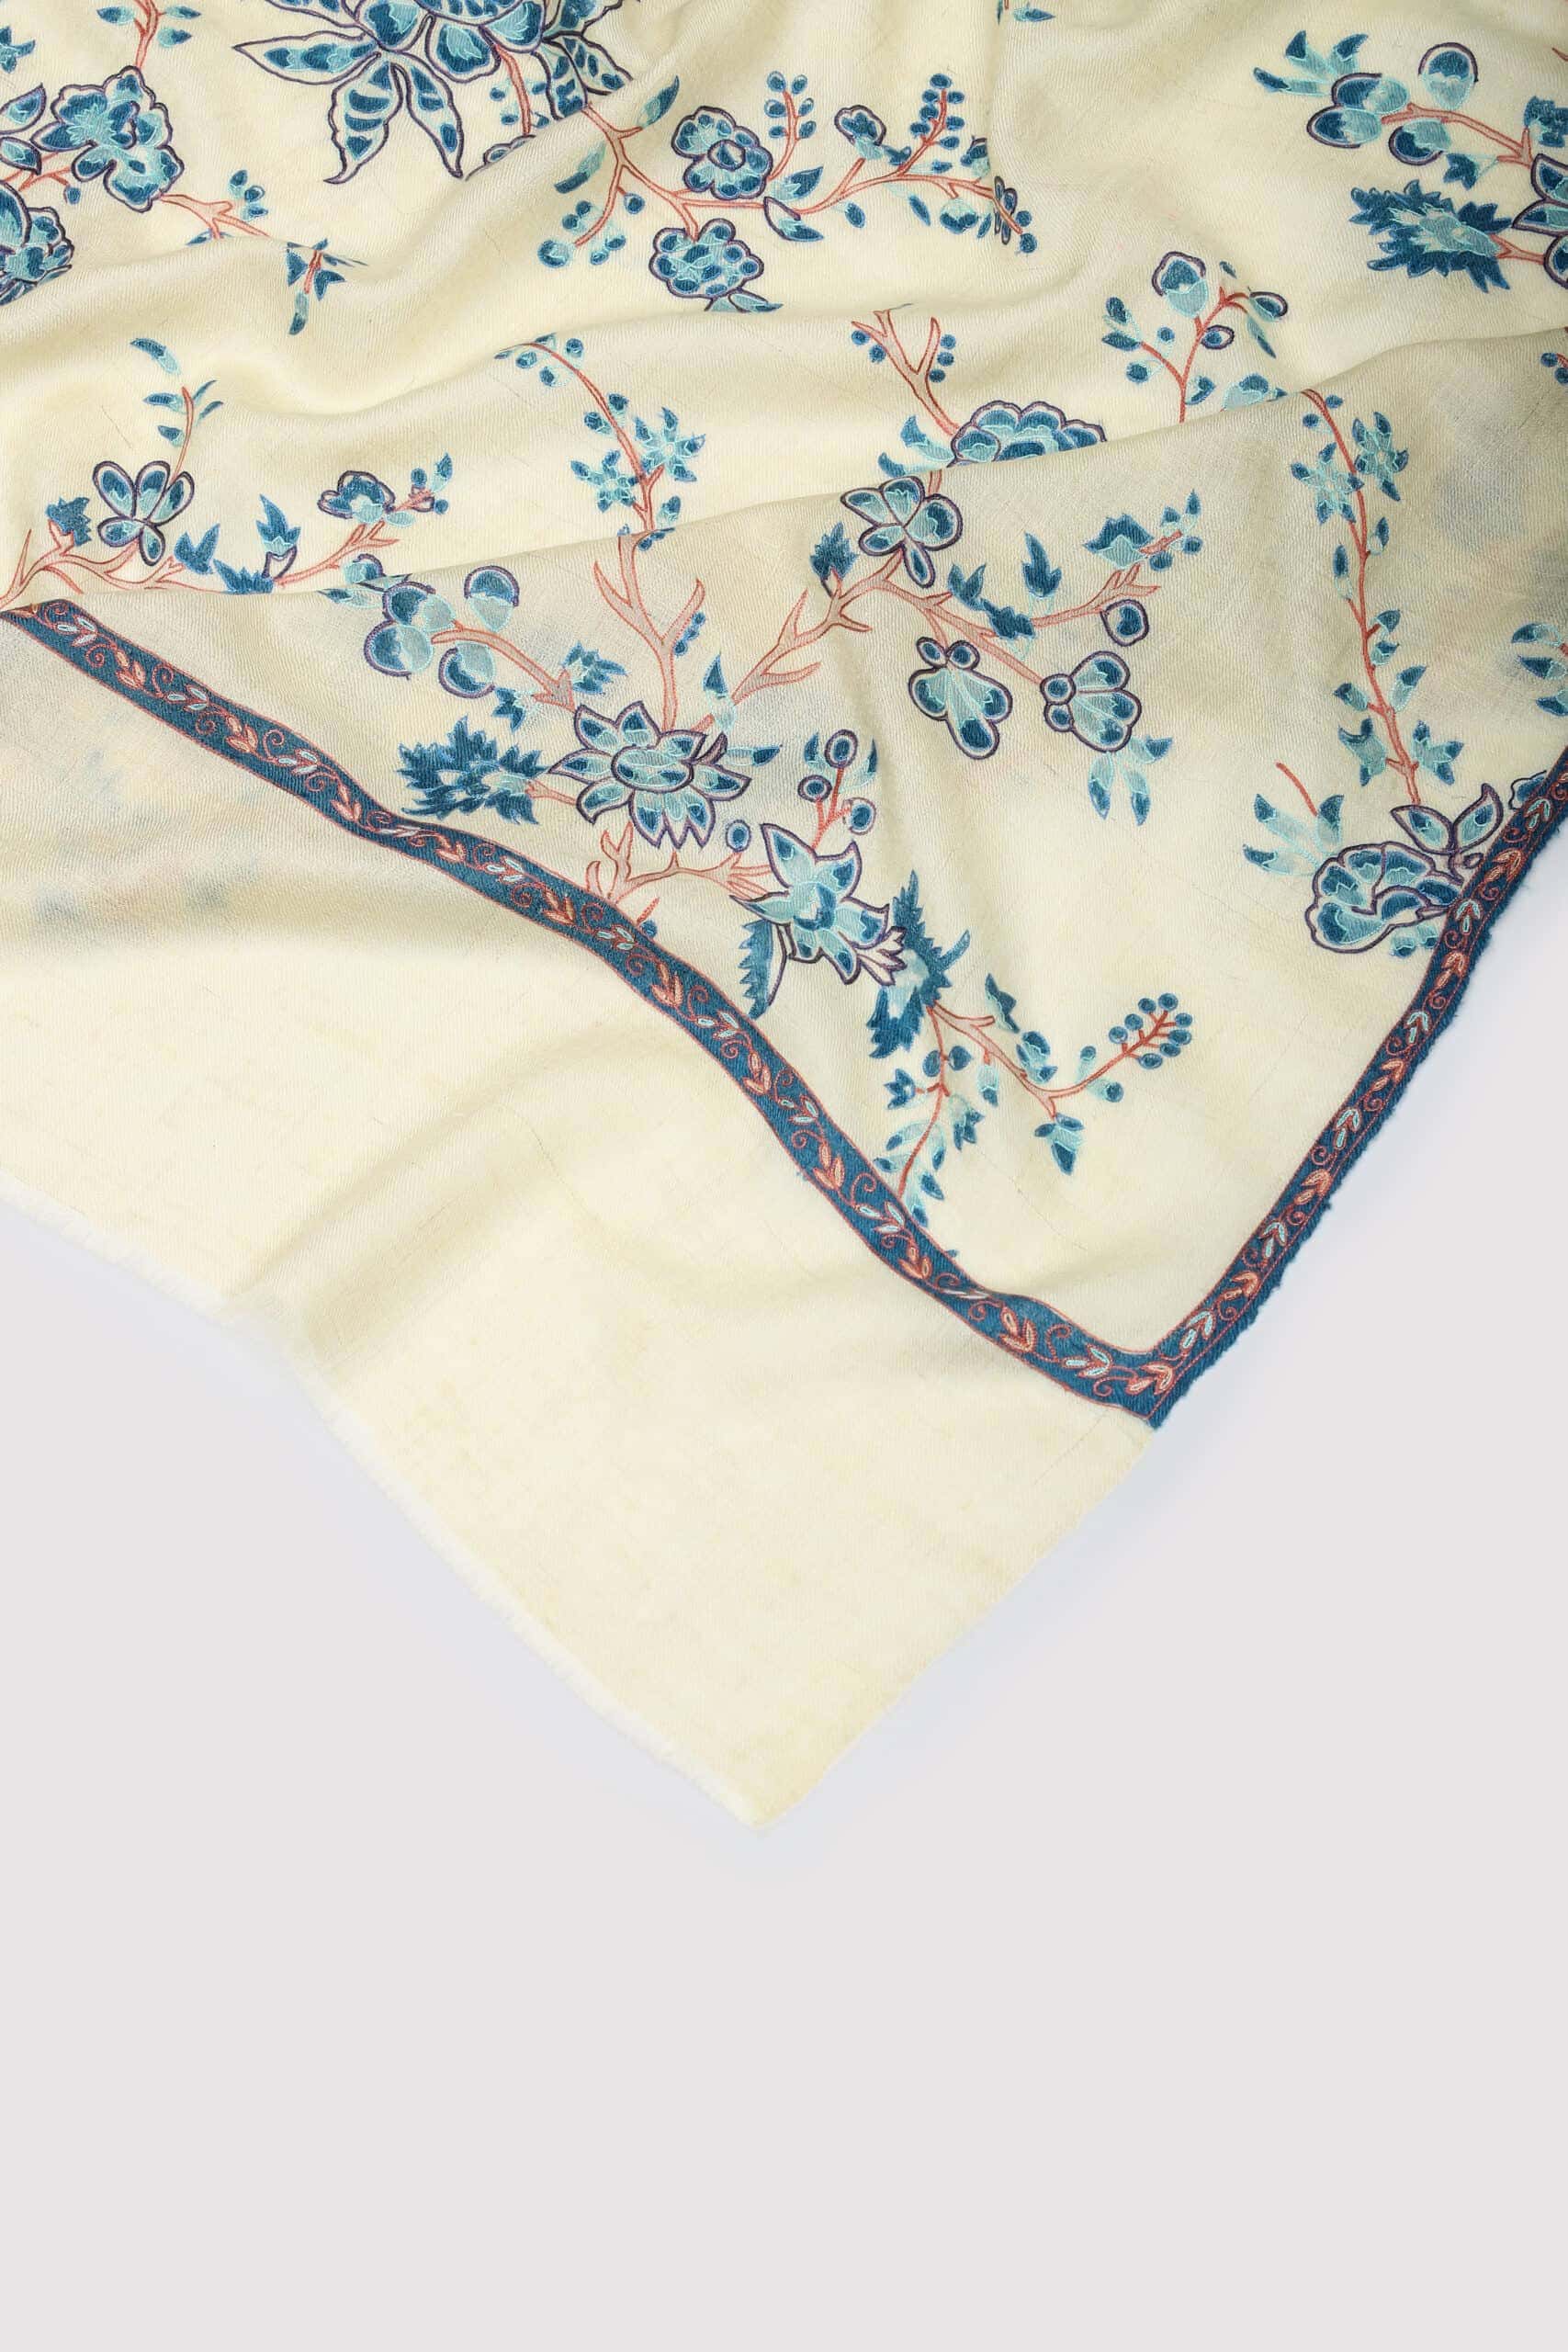 Blue & yellow shaded jannat cashmere shawl on a white background- Me & K